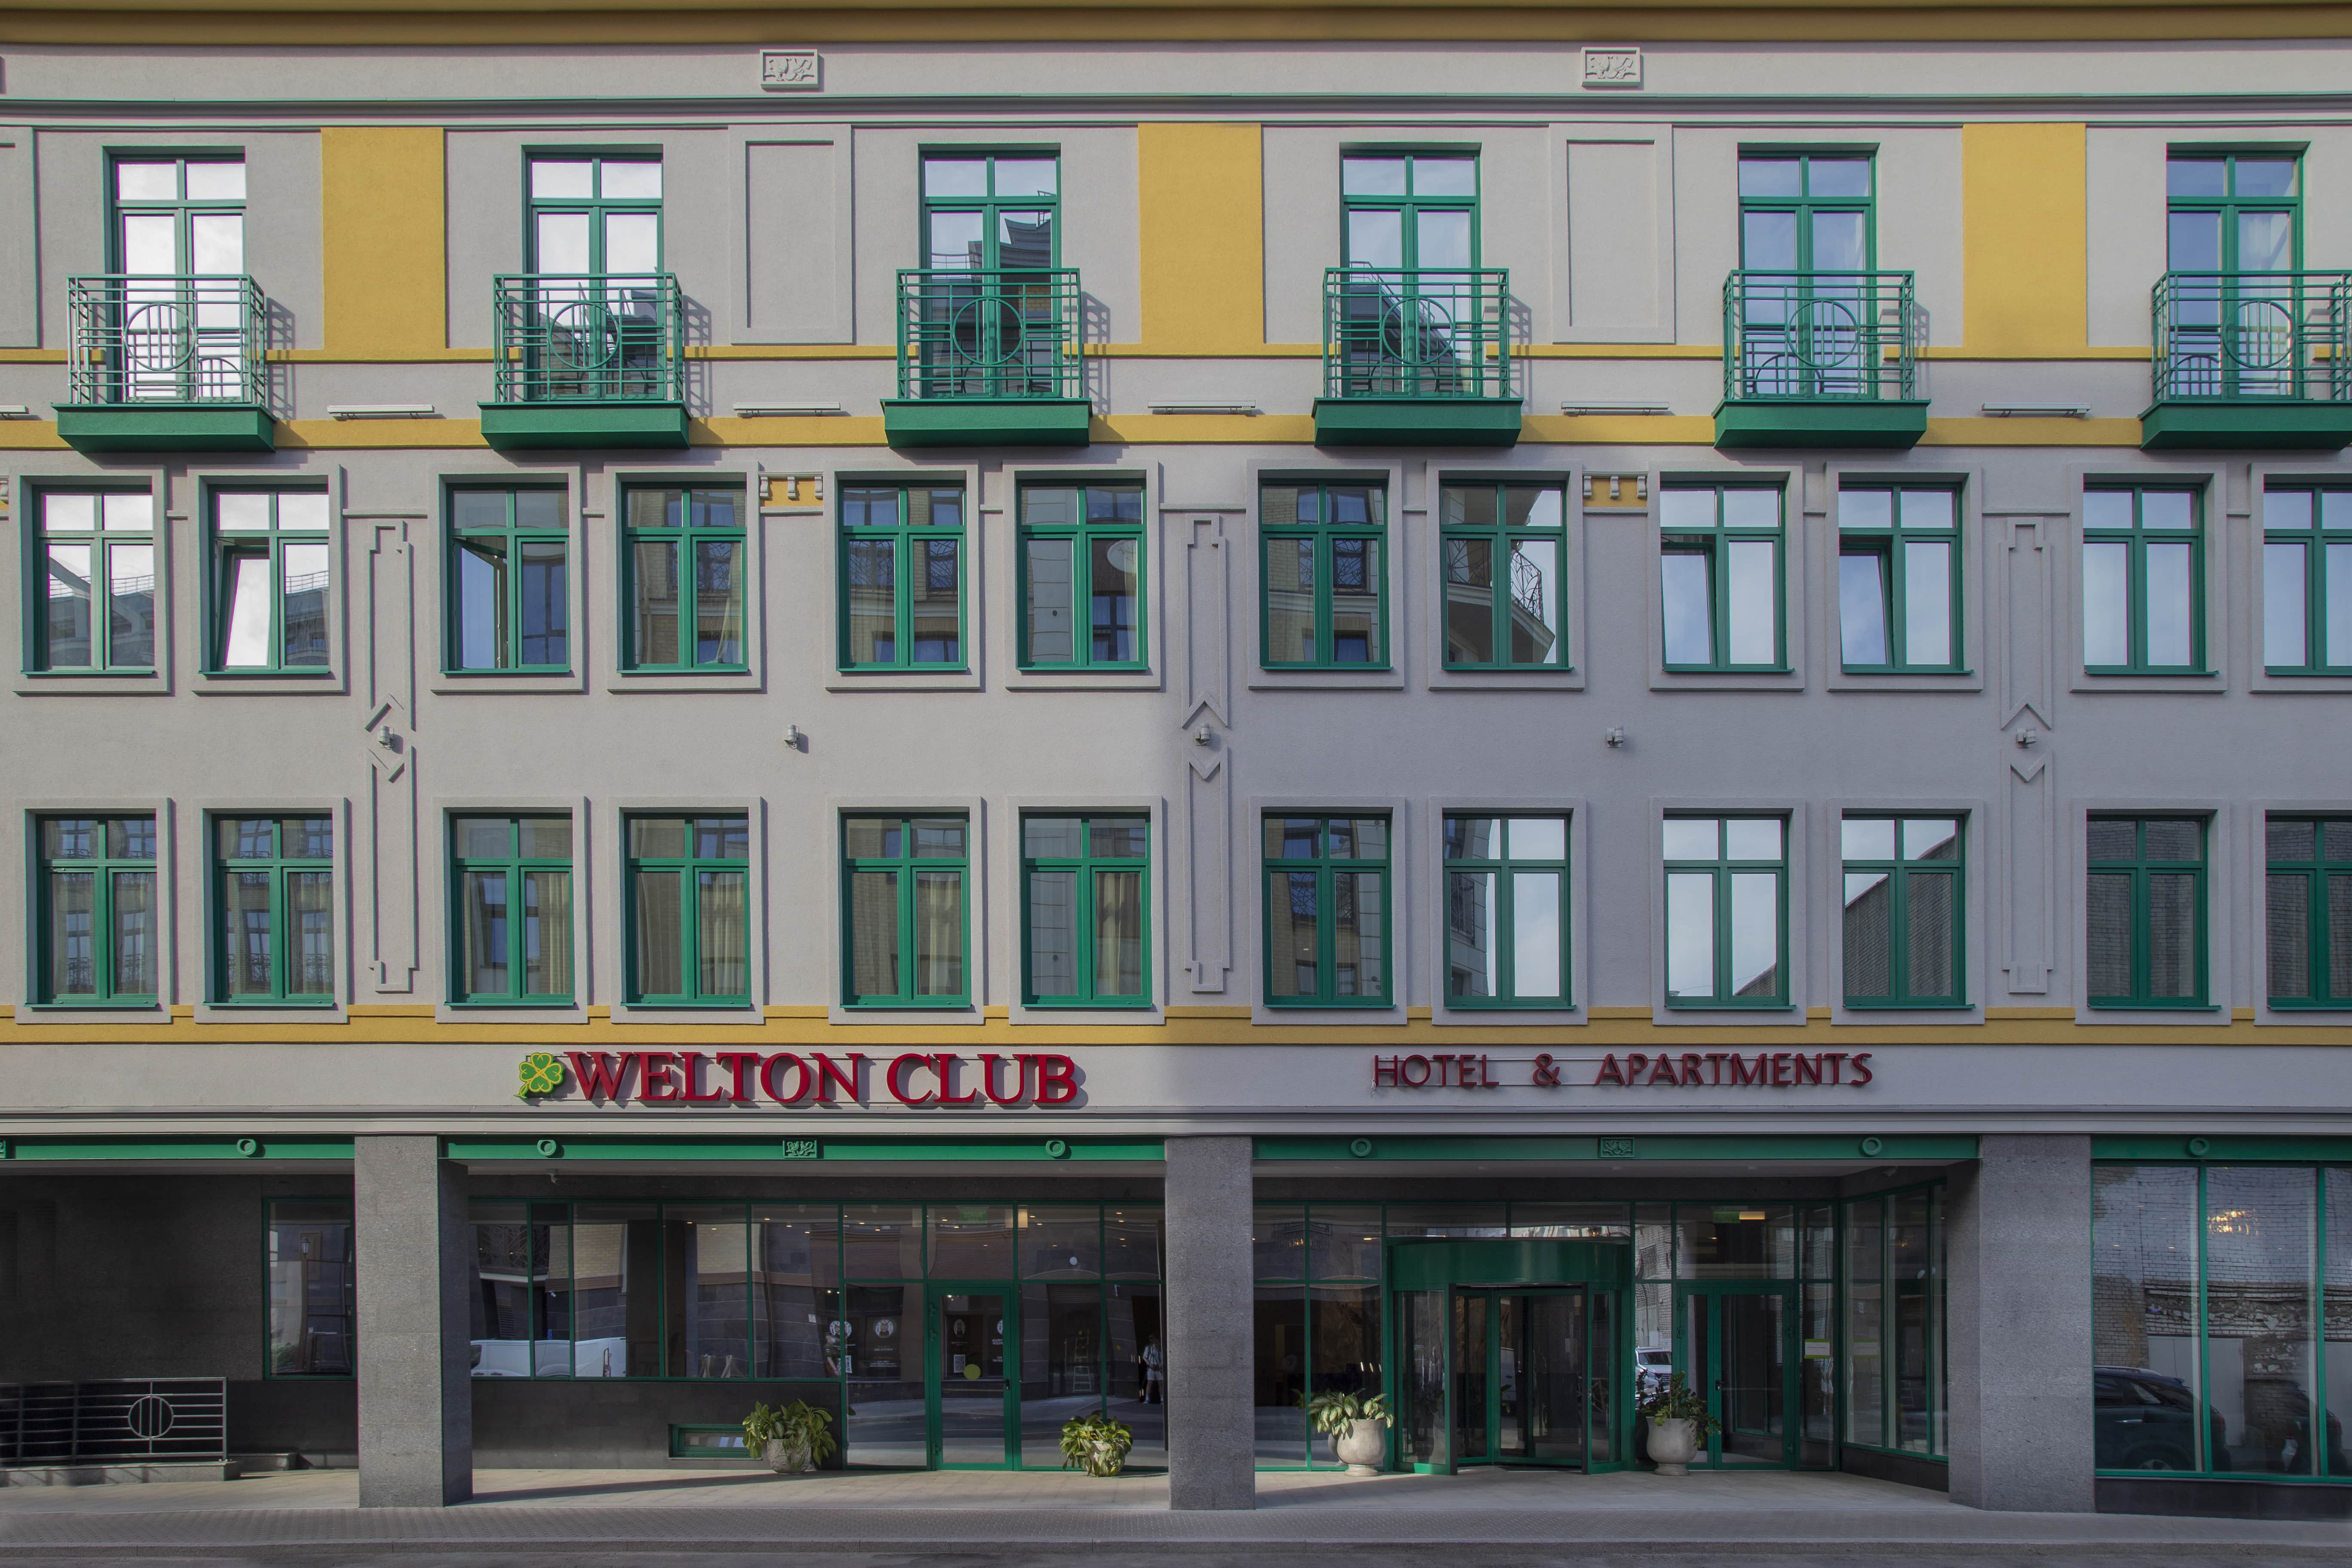 Welton Club Hotel & Apartments